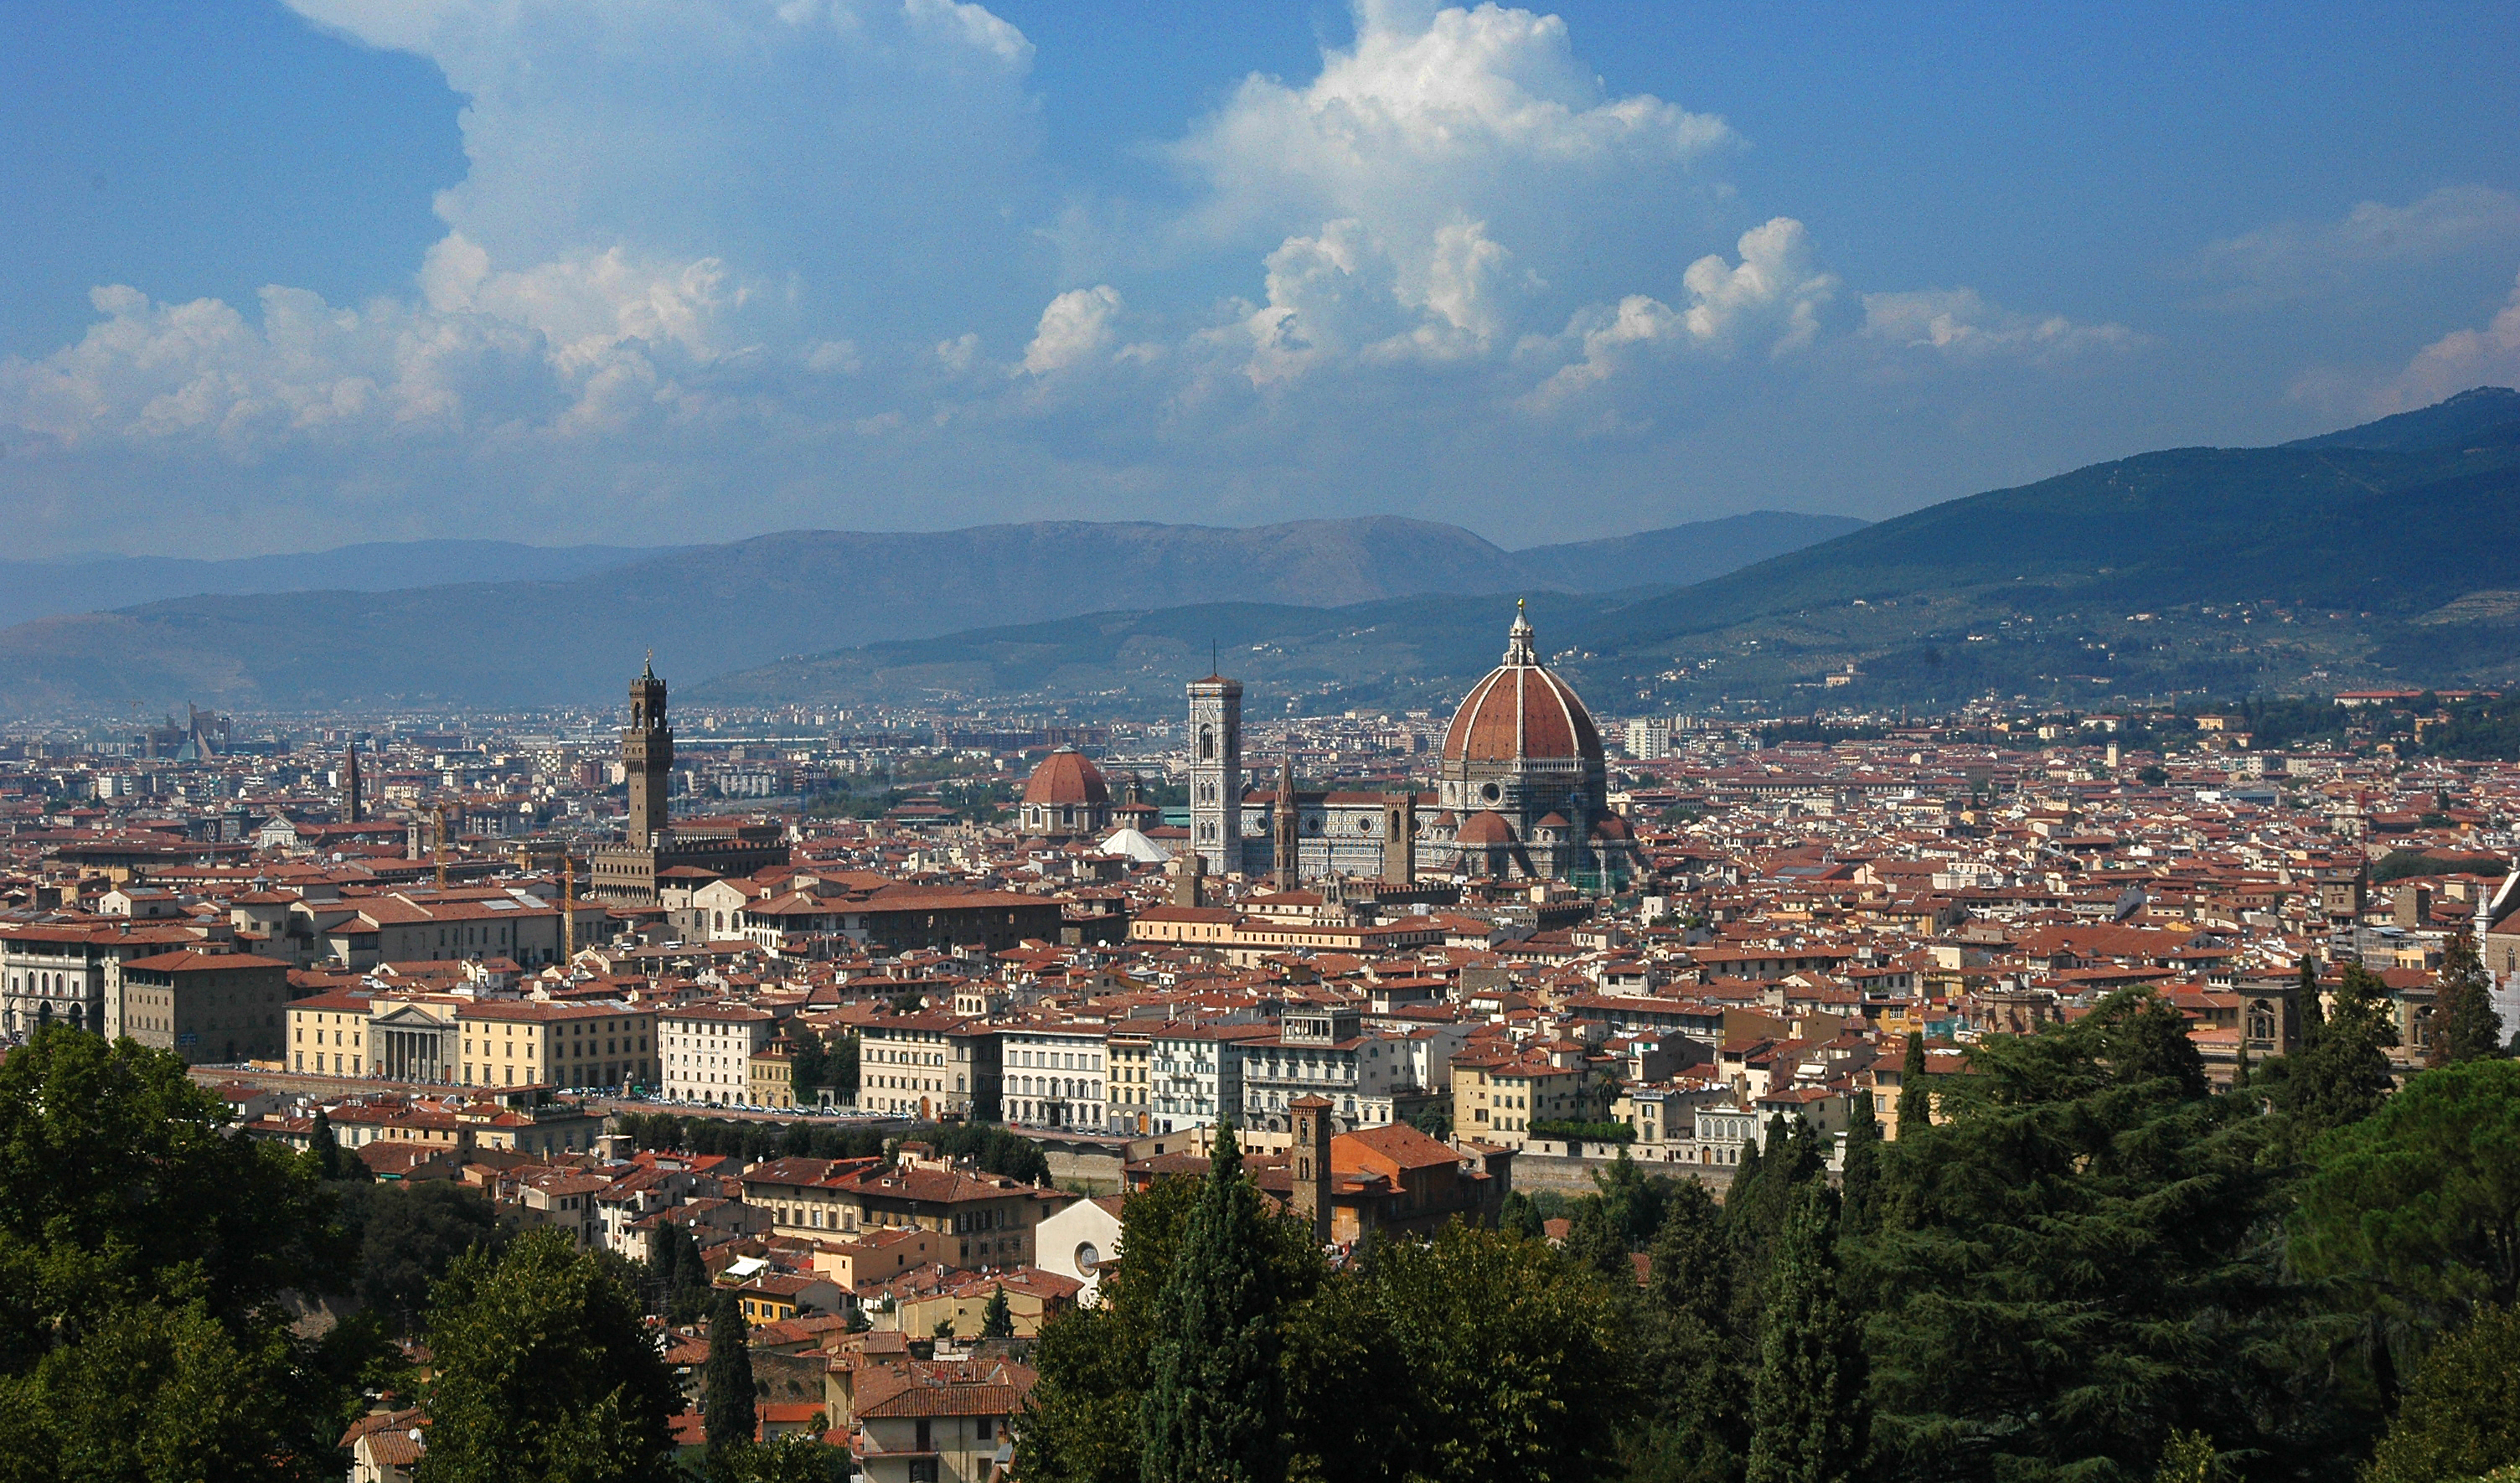 Florence. Amada44 (CC BY 3.0)